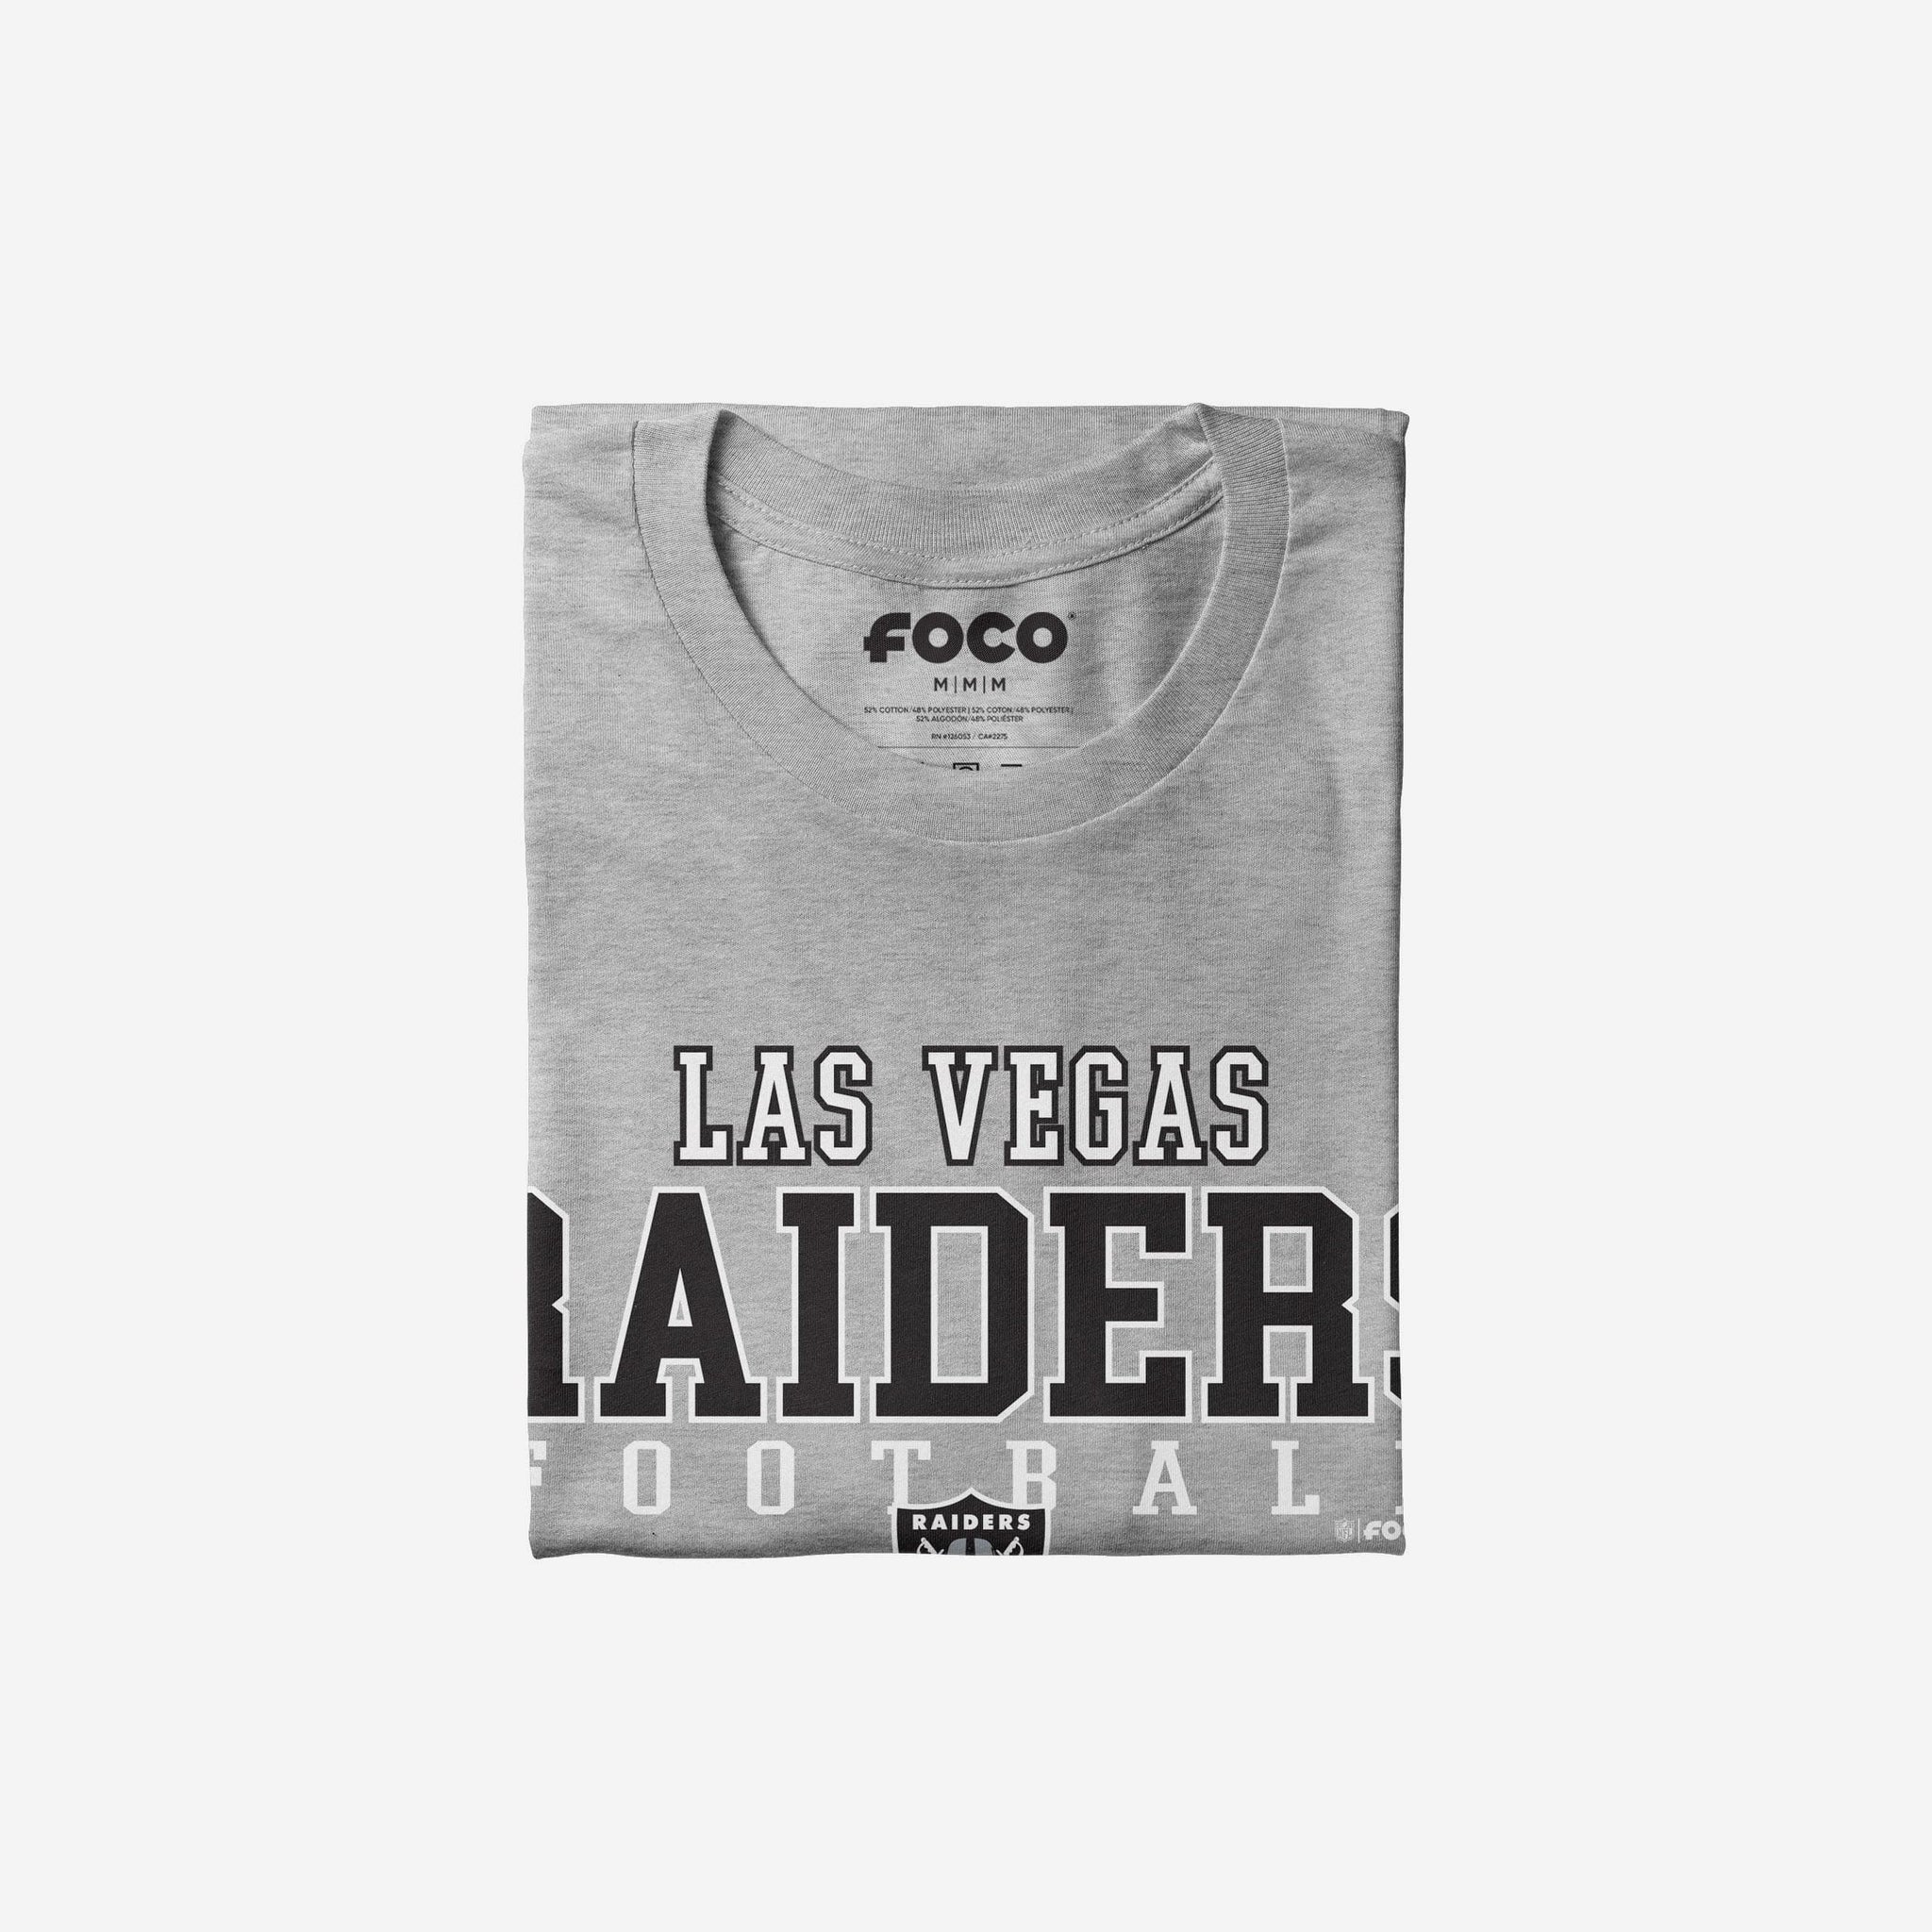 FOCO Men's NFL Team Football Wordmark Short Sleeve T-Shirt